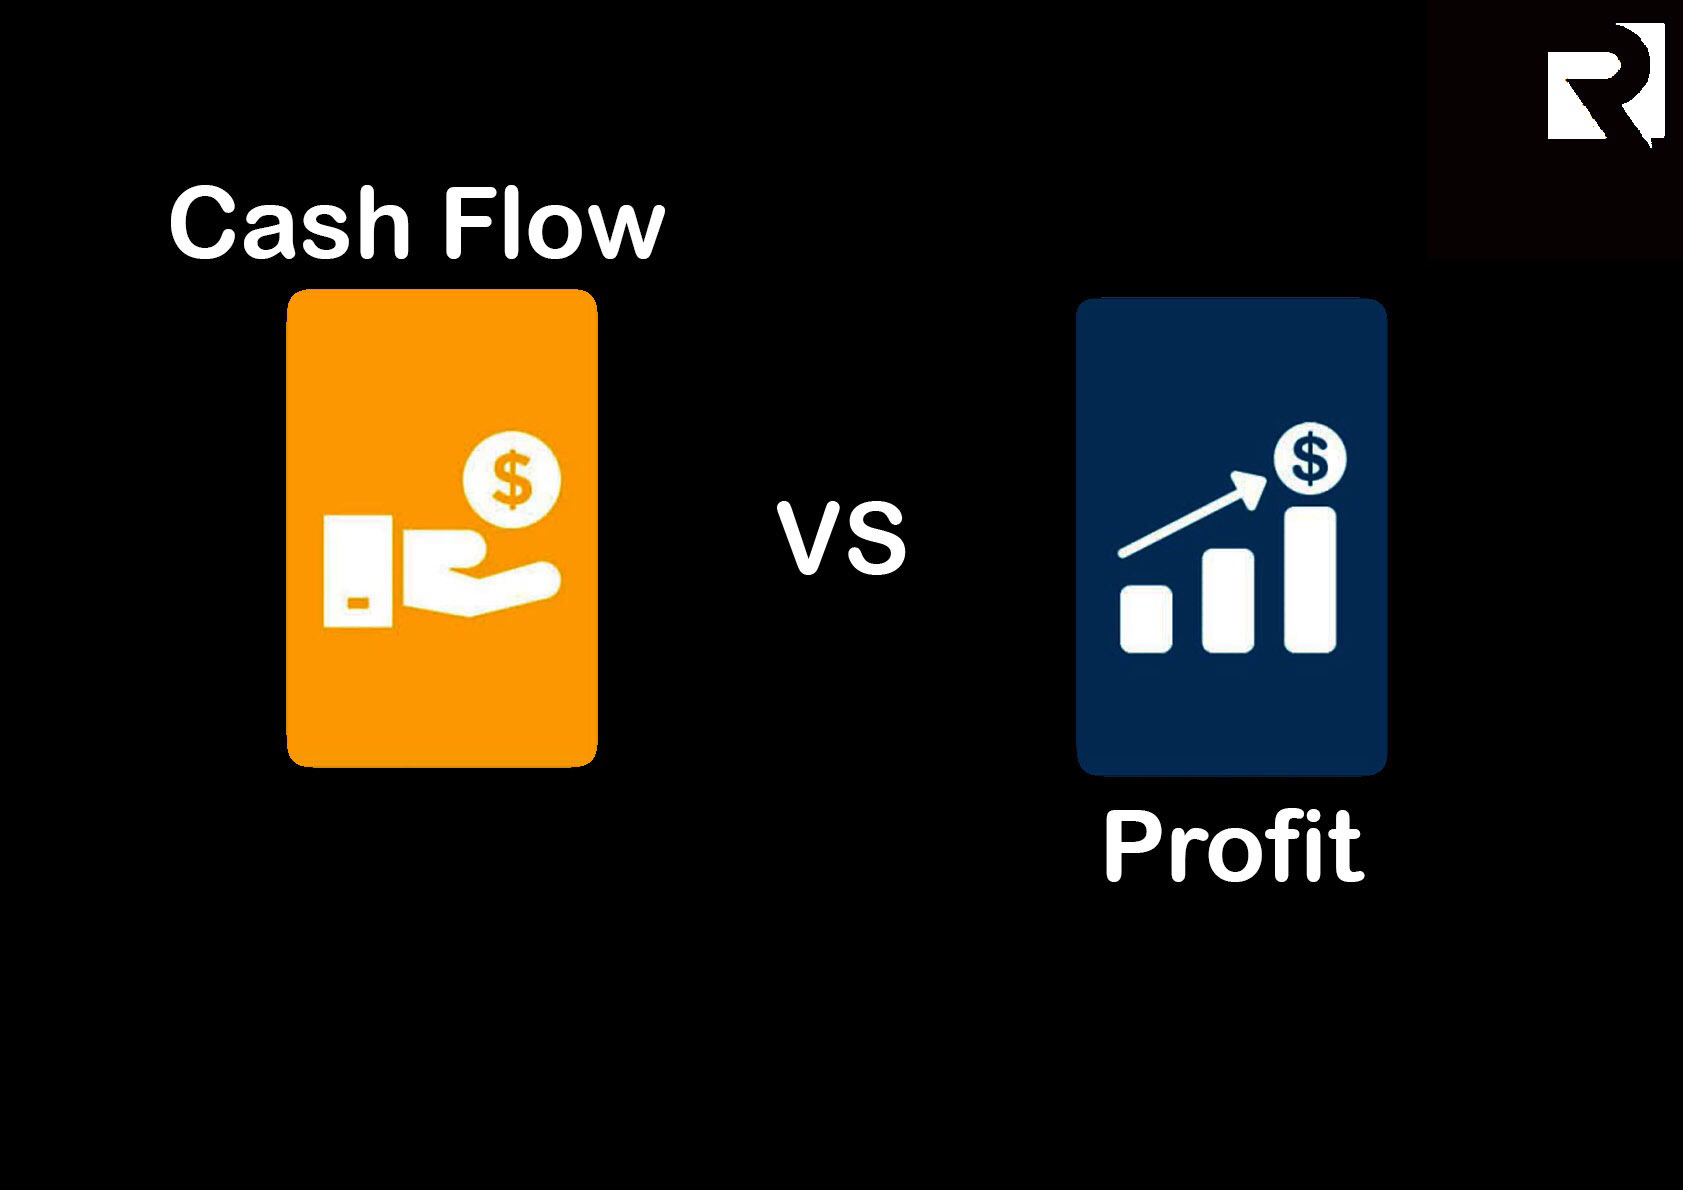 Cash Flow versus Profit